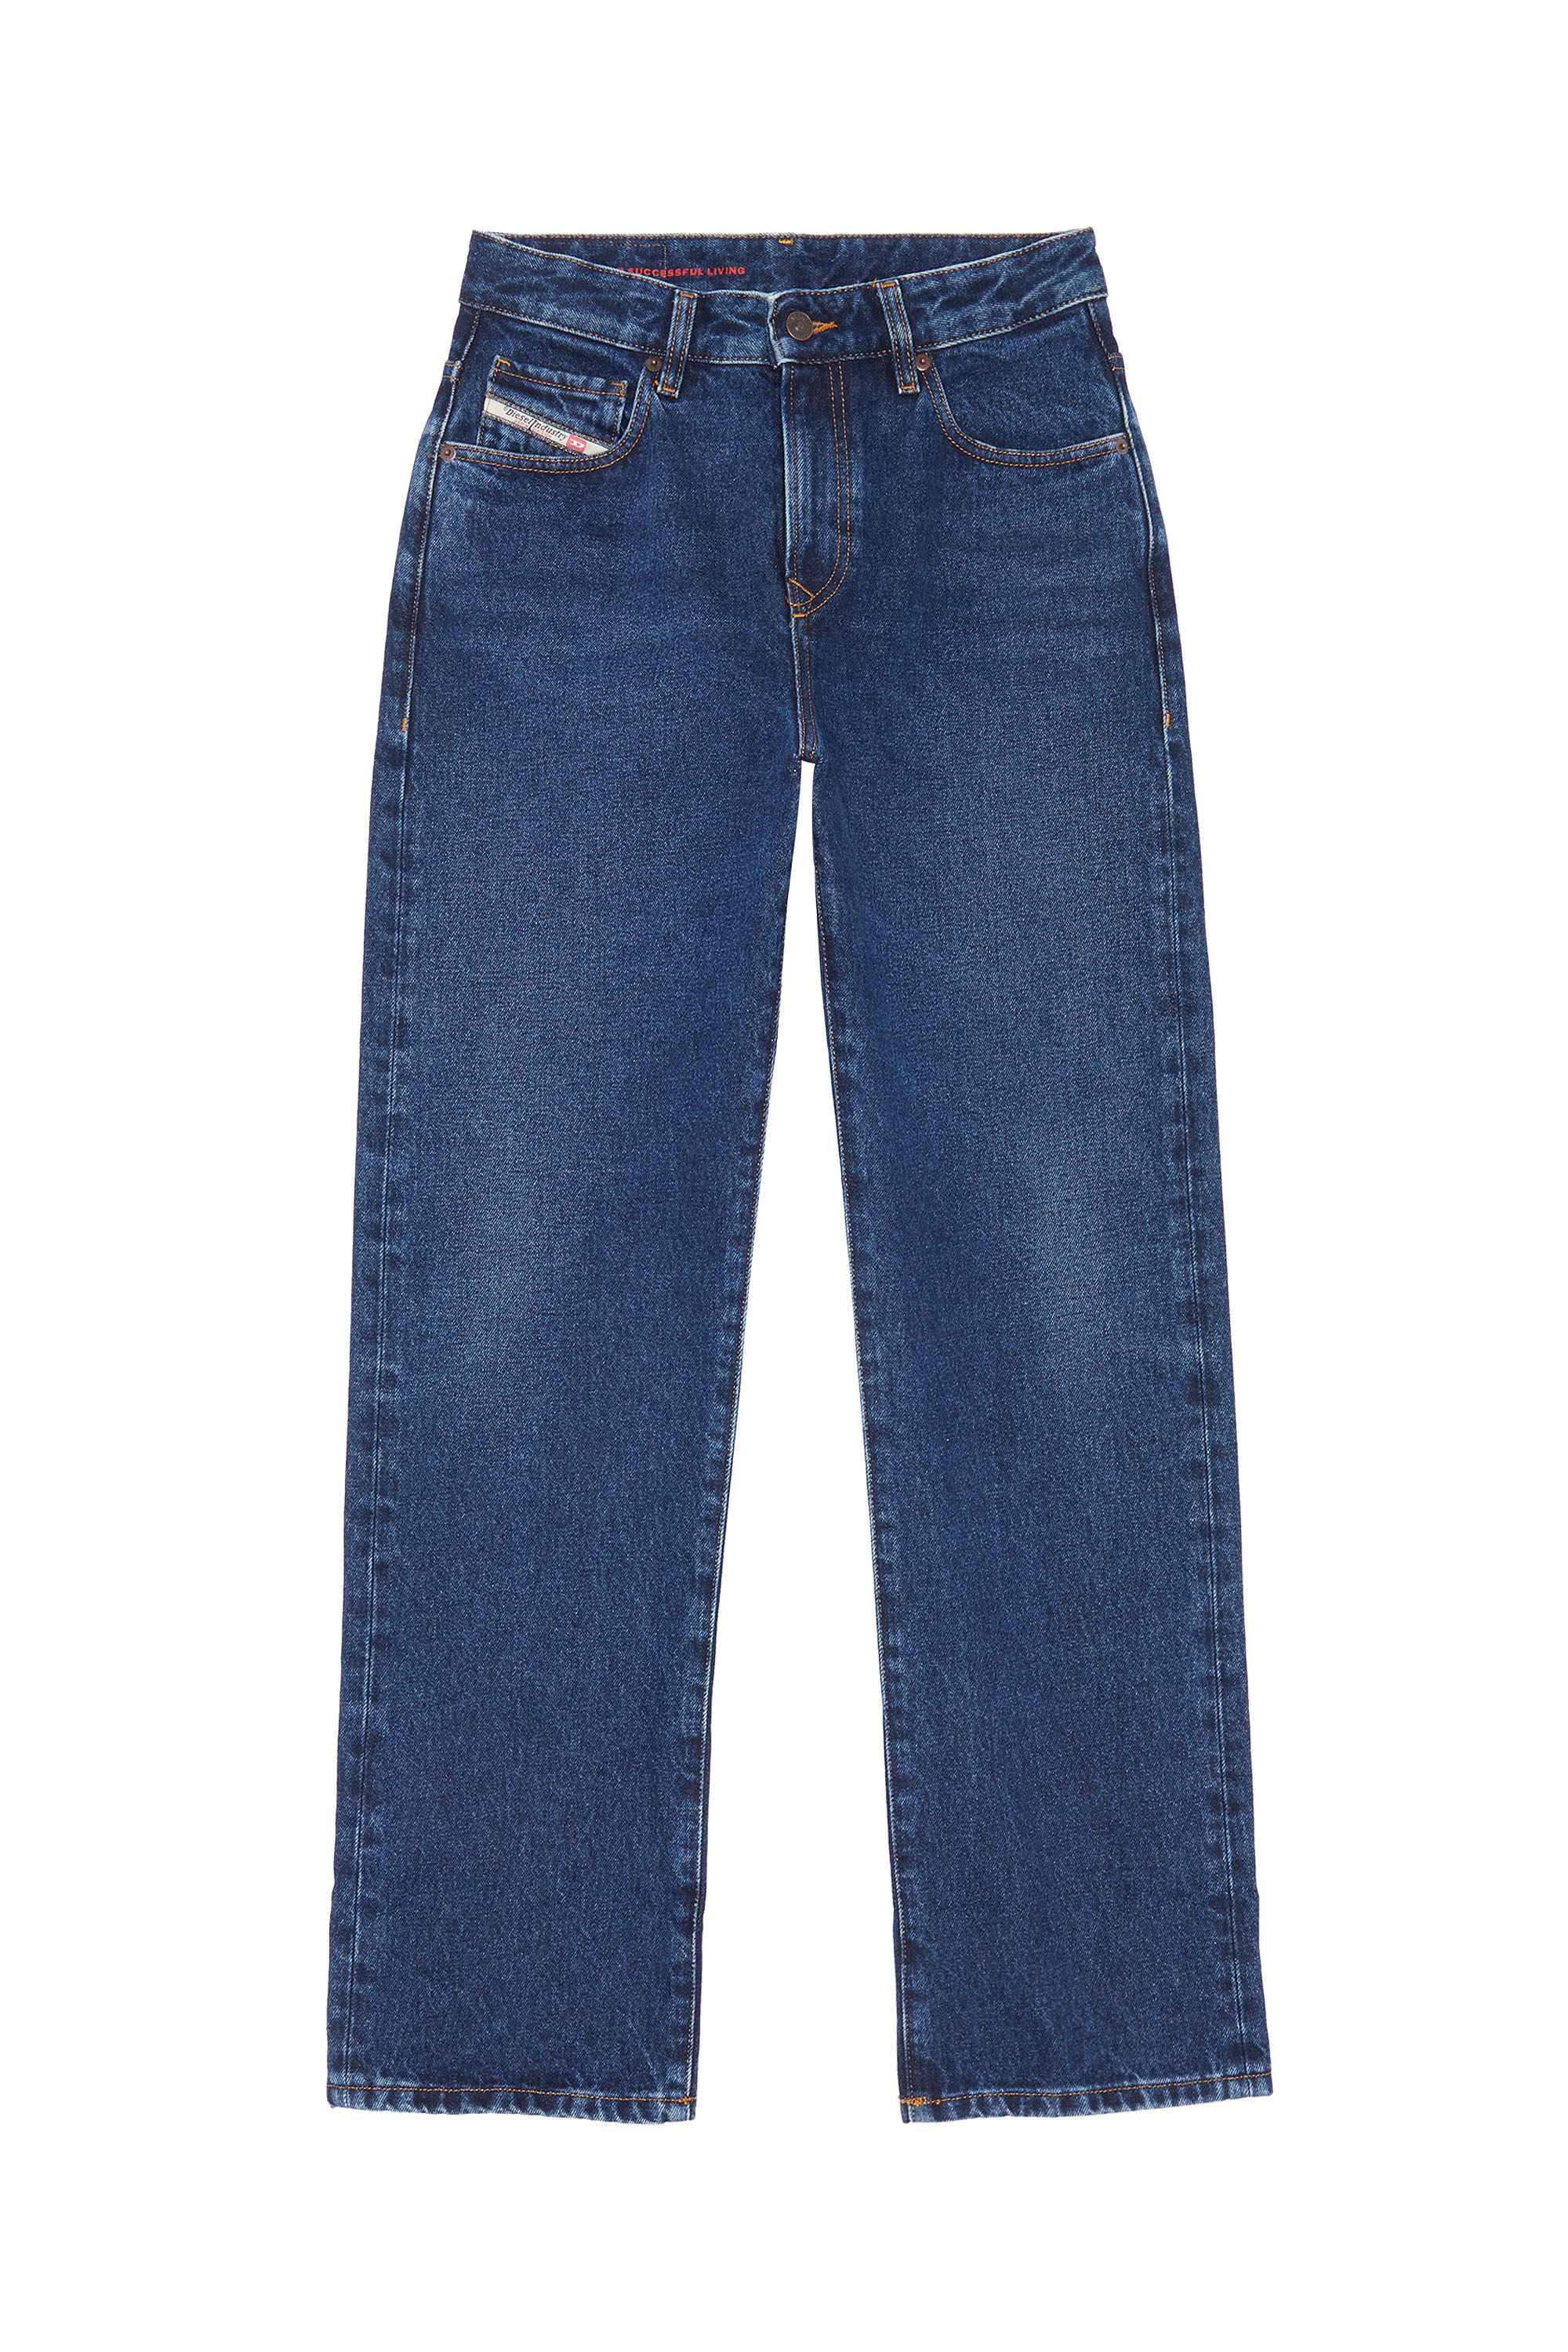 1999 007E6 Straight Jeans, Dunkelblau - Jeans